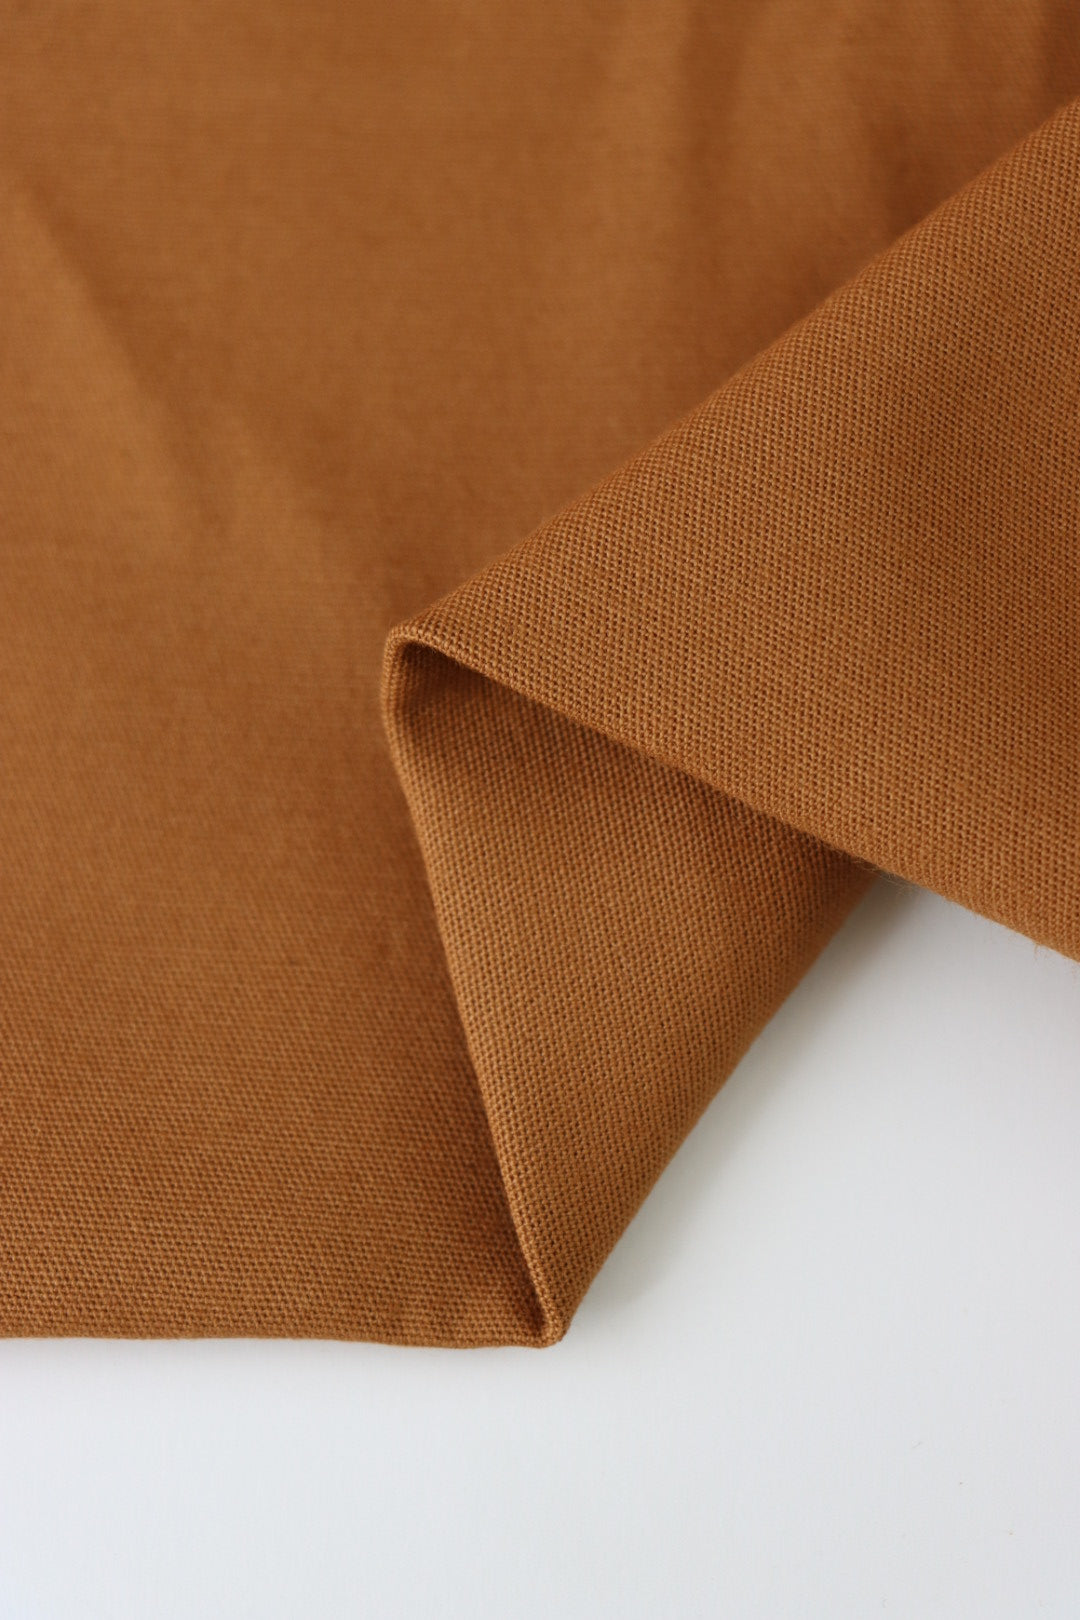 Thin Solid Color Sand Washing Treatment Cotton Linen Cloth Slub Soft Fabric